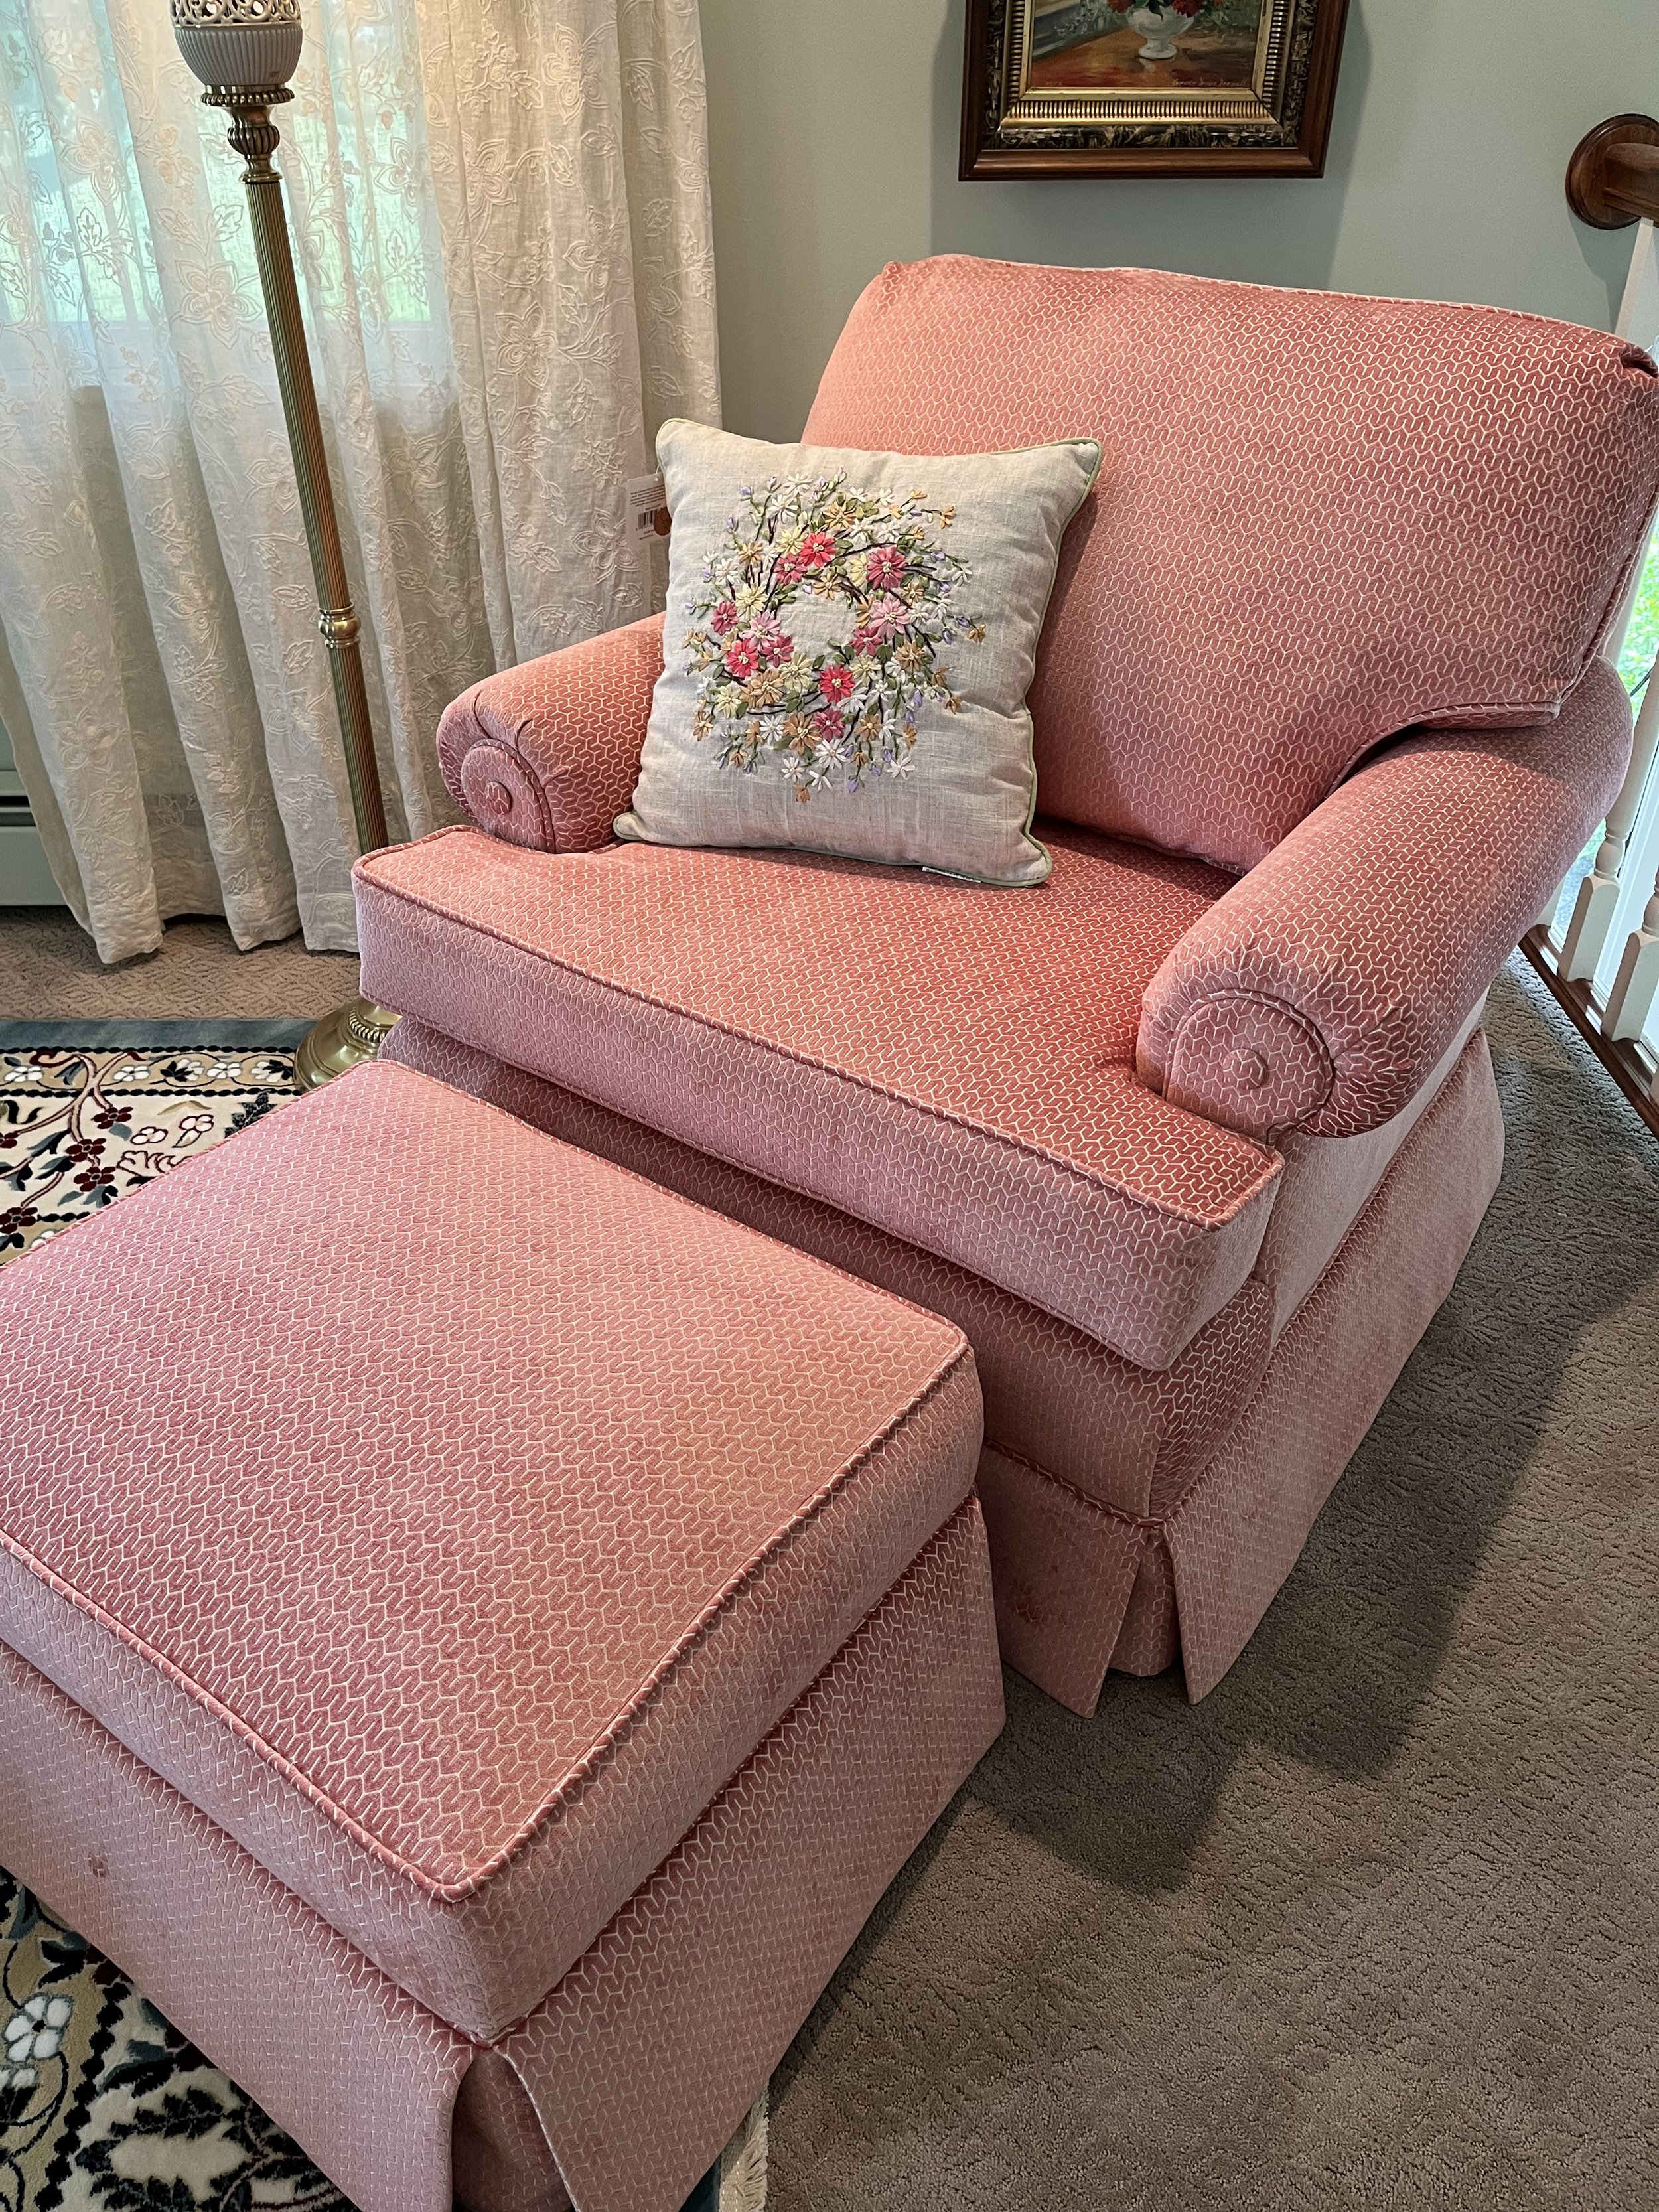 pink club chair and ottoman.jpg